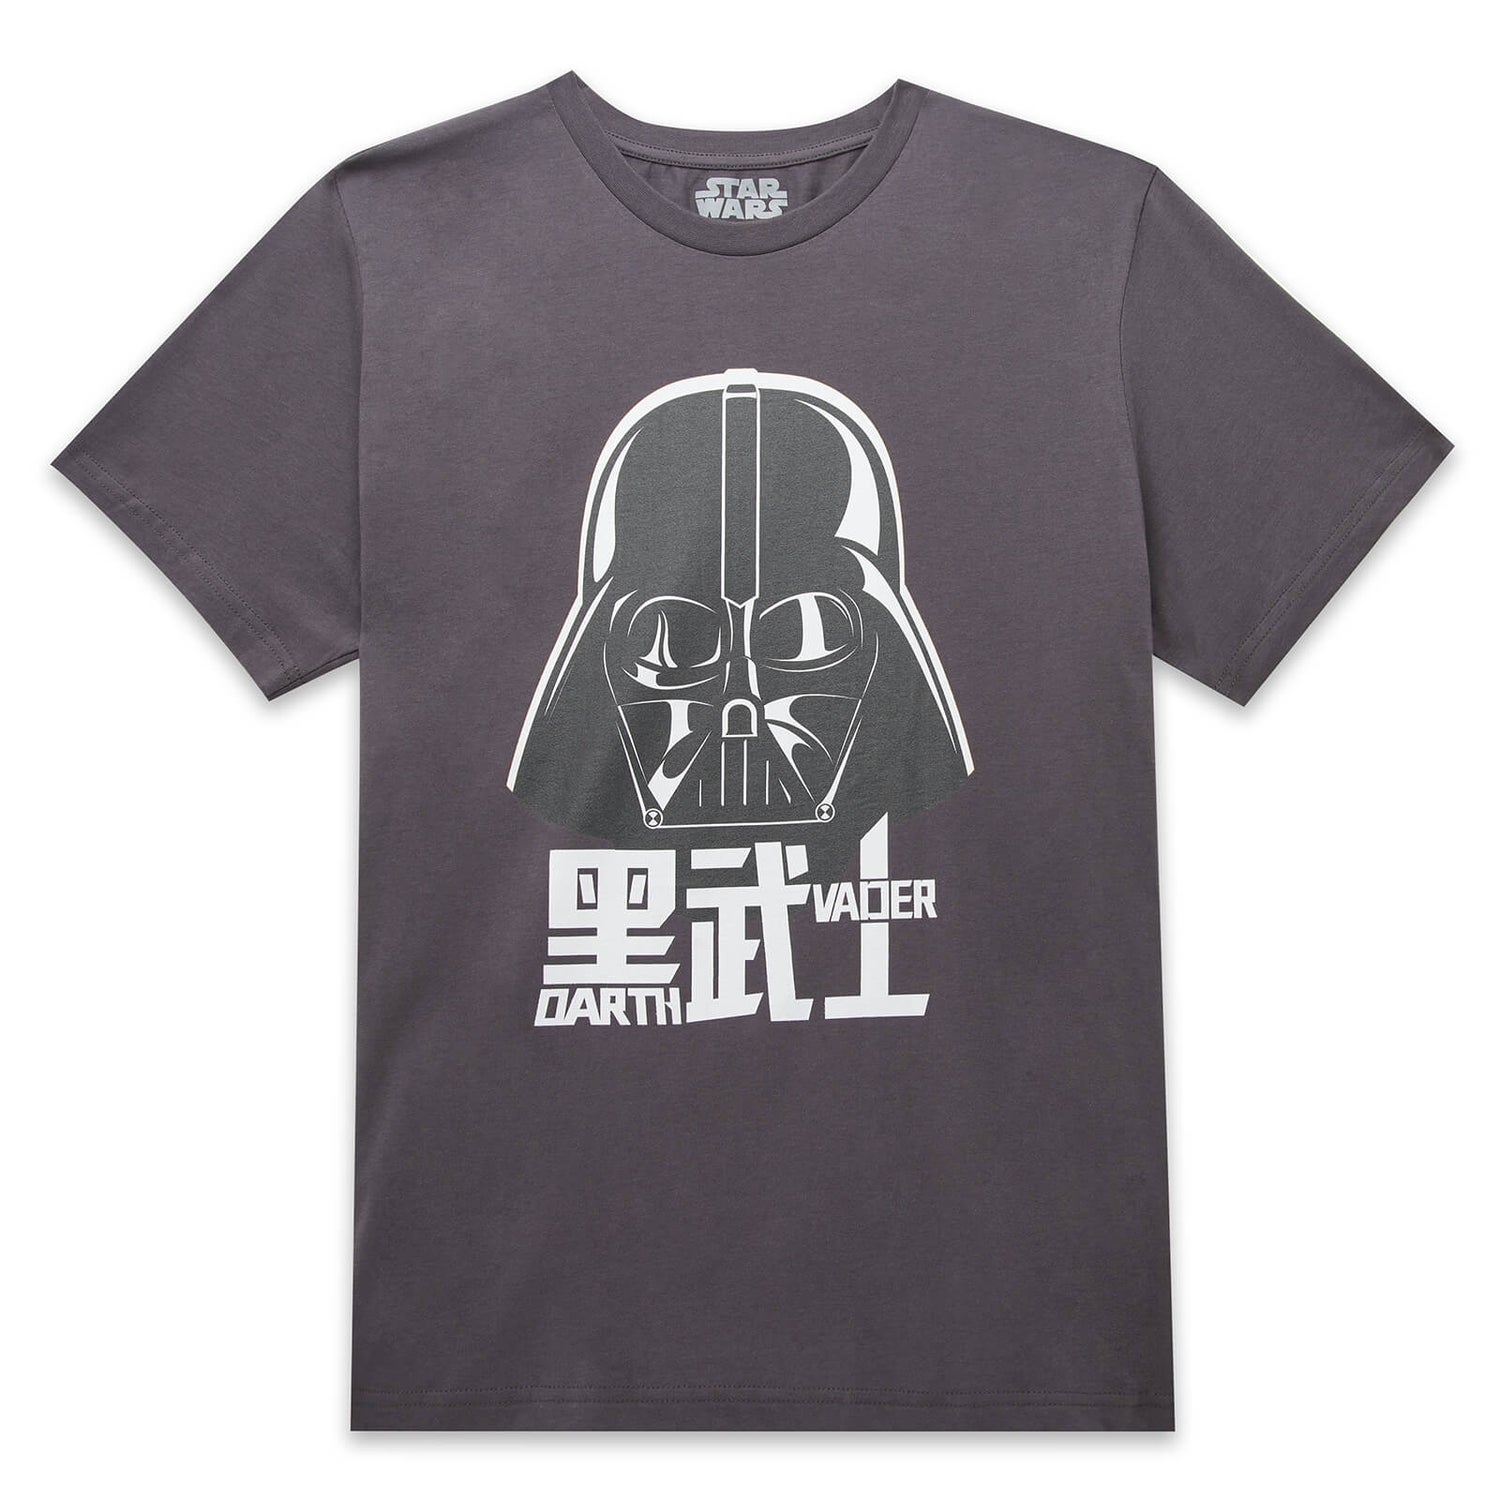 Camiseta unisex Darth Vader de Star Wars - Gris oscuro